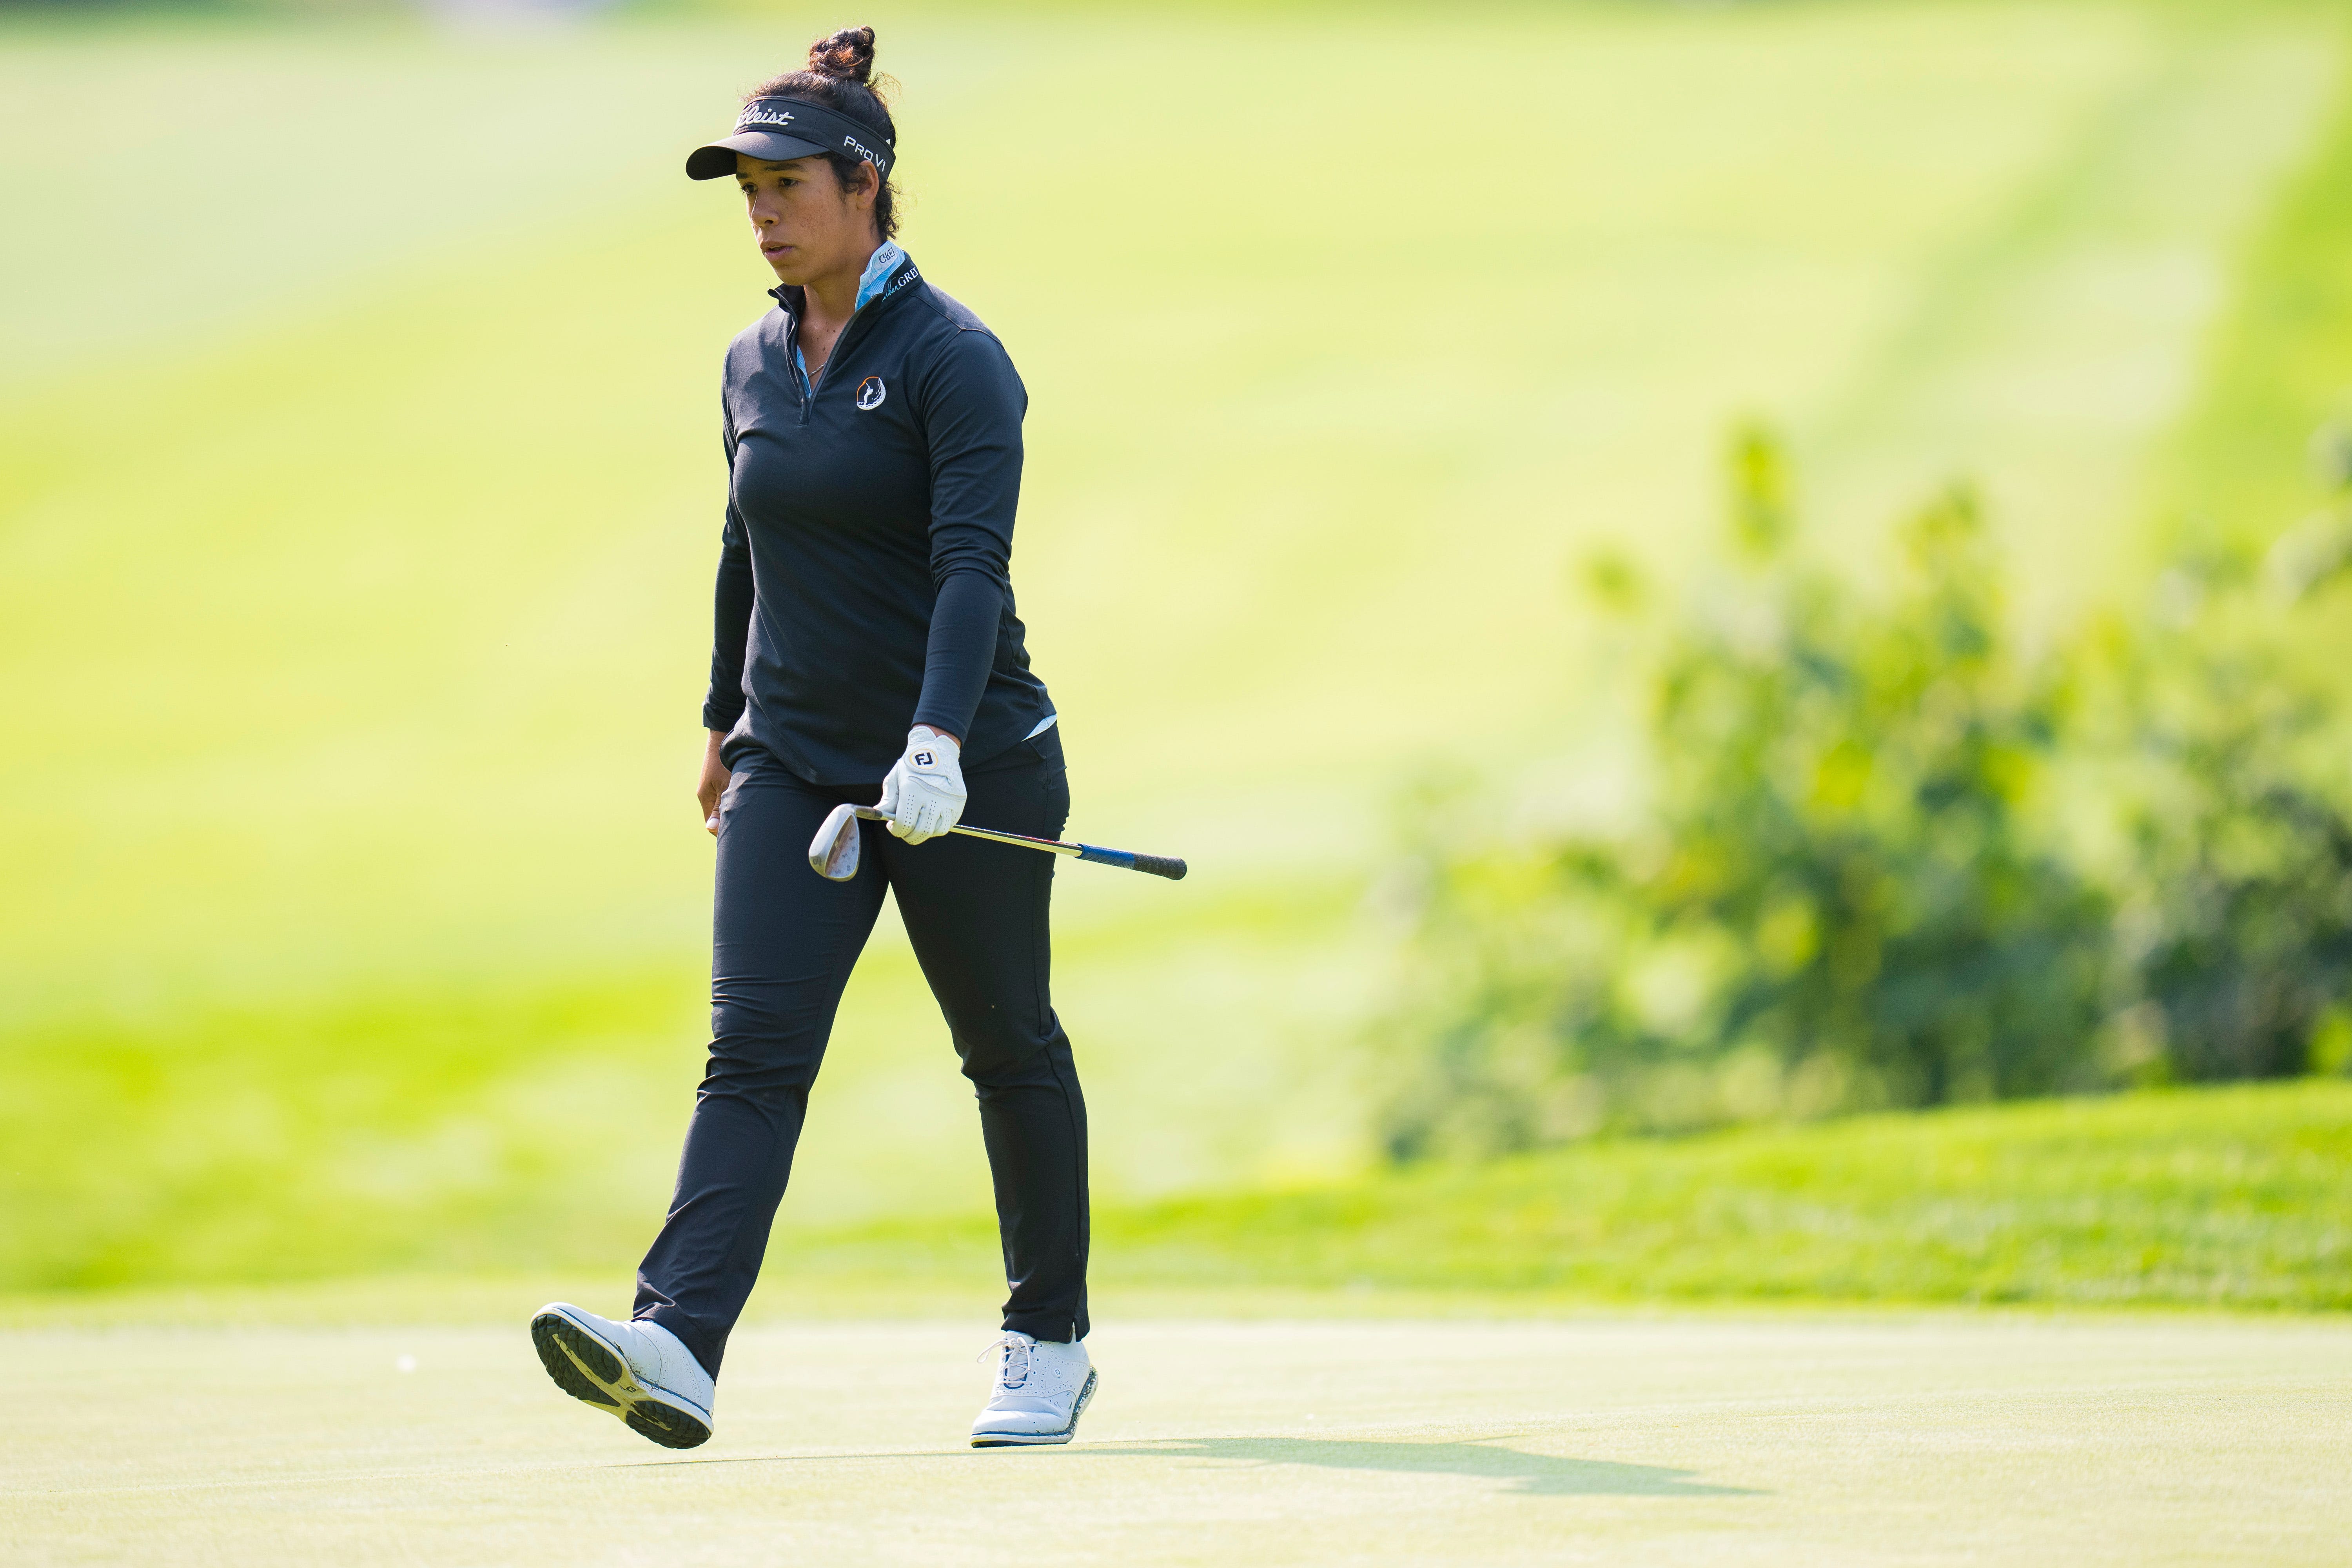 Texas Tech alum Sofia Garcia balancing the dream and job aspects of LPGA Tour life